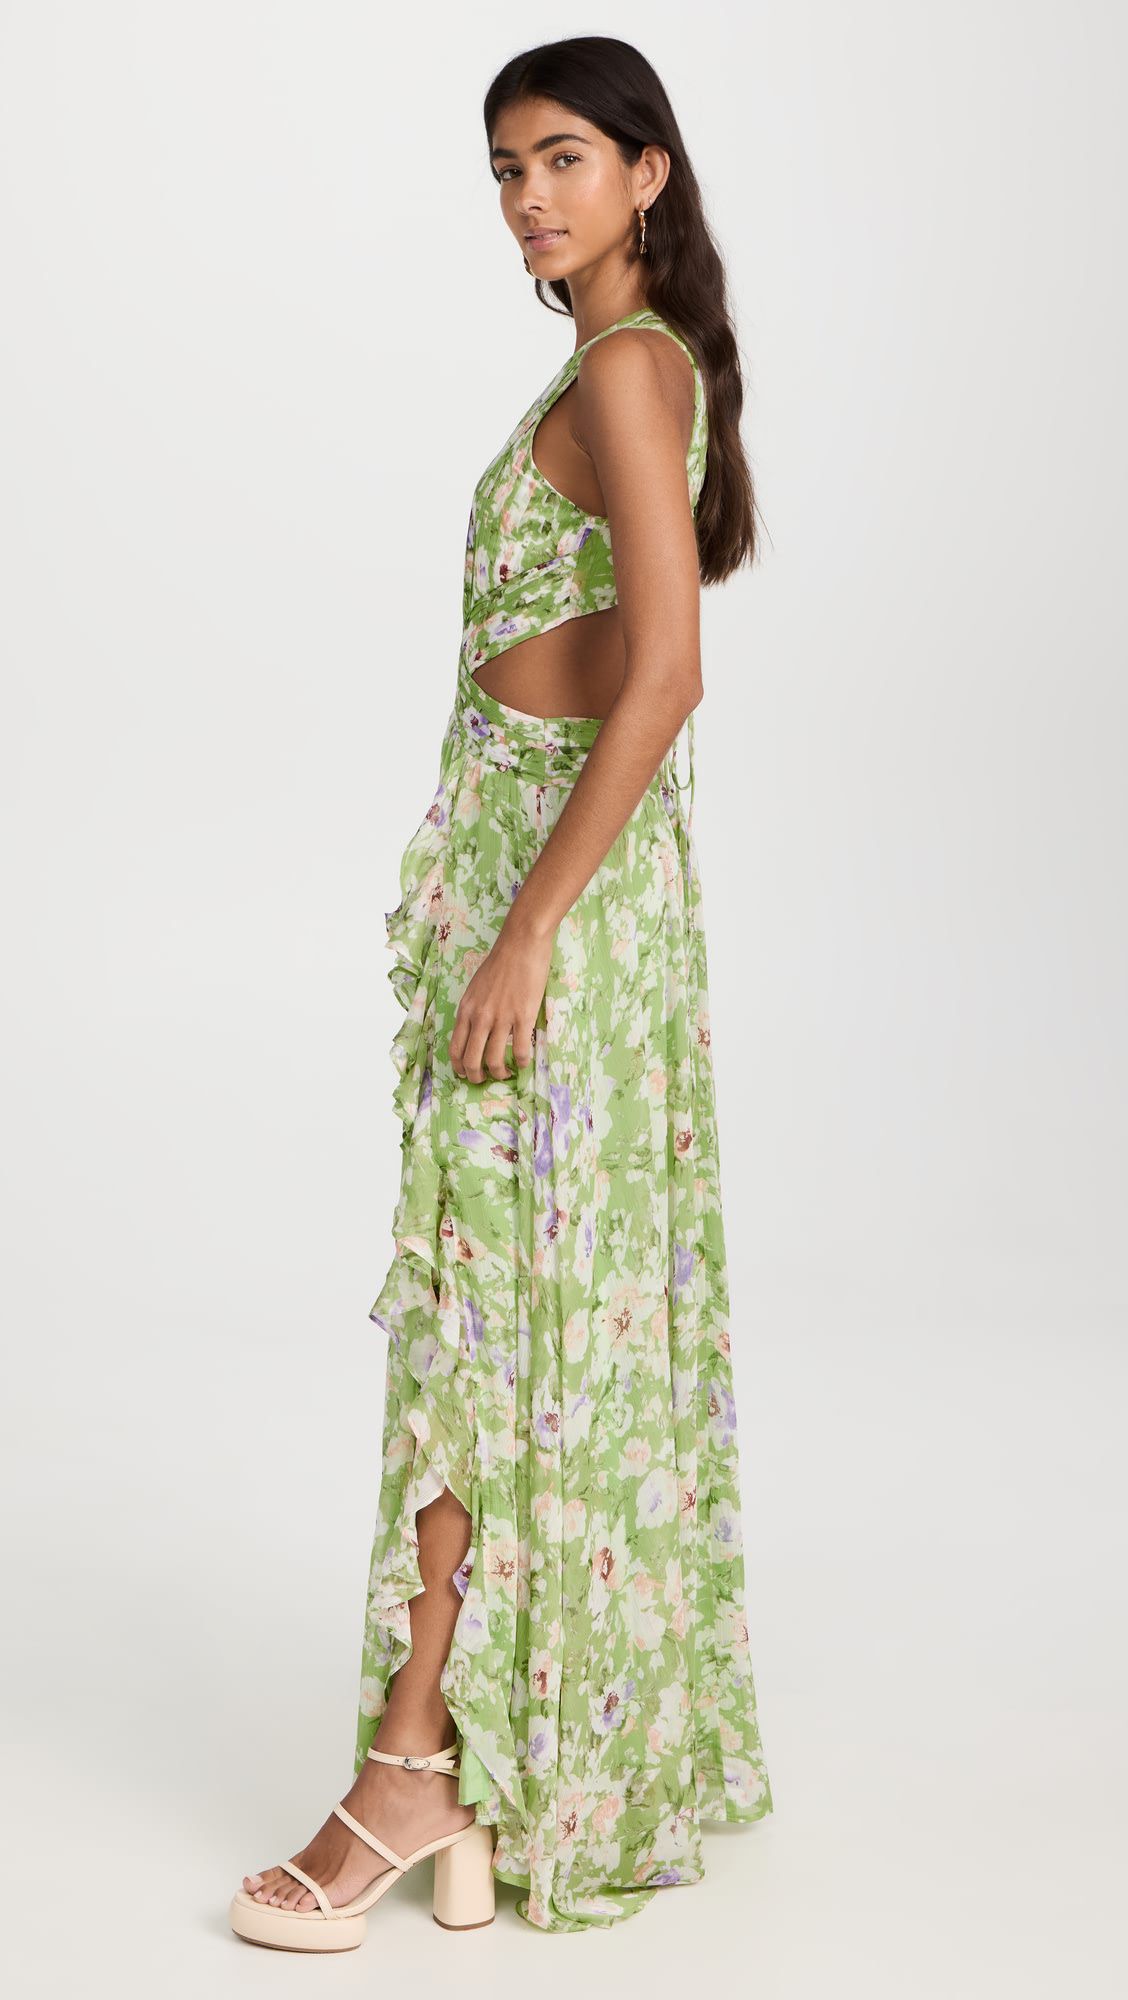 Floral deep v waist backless cutout elegant maxi dress